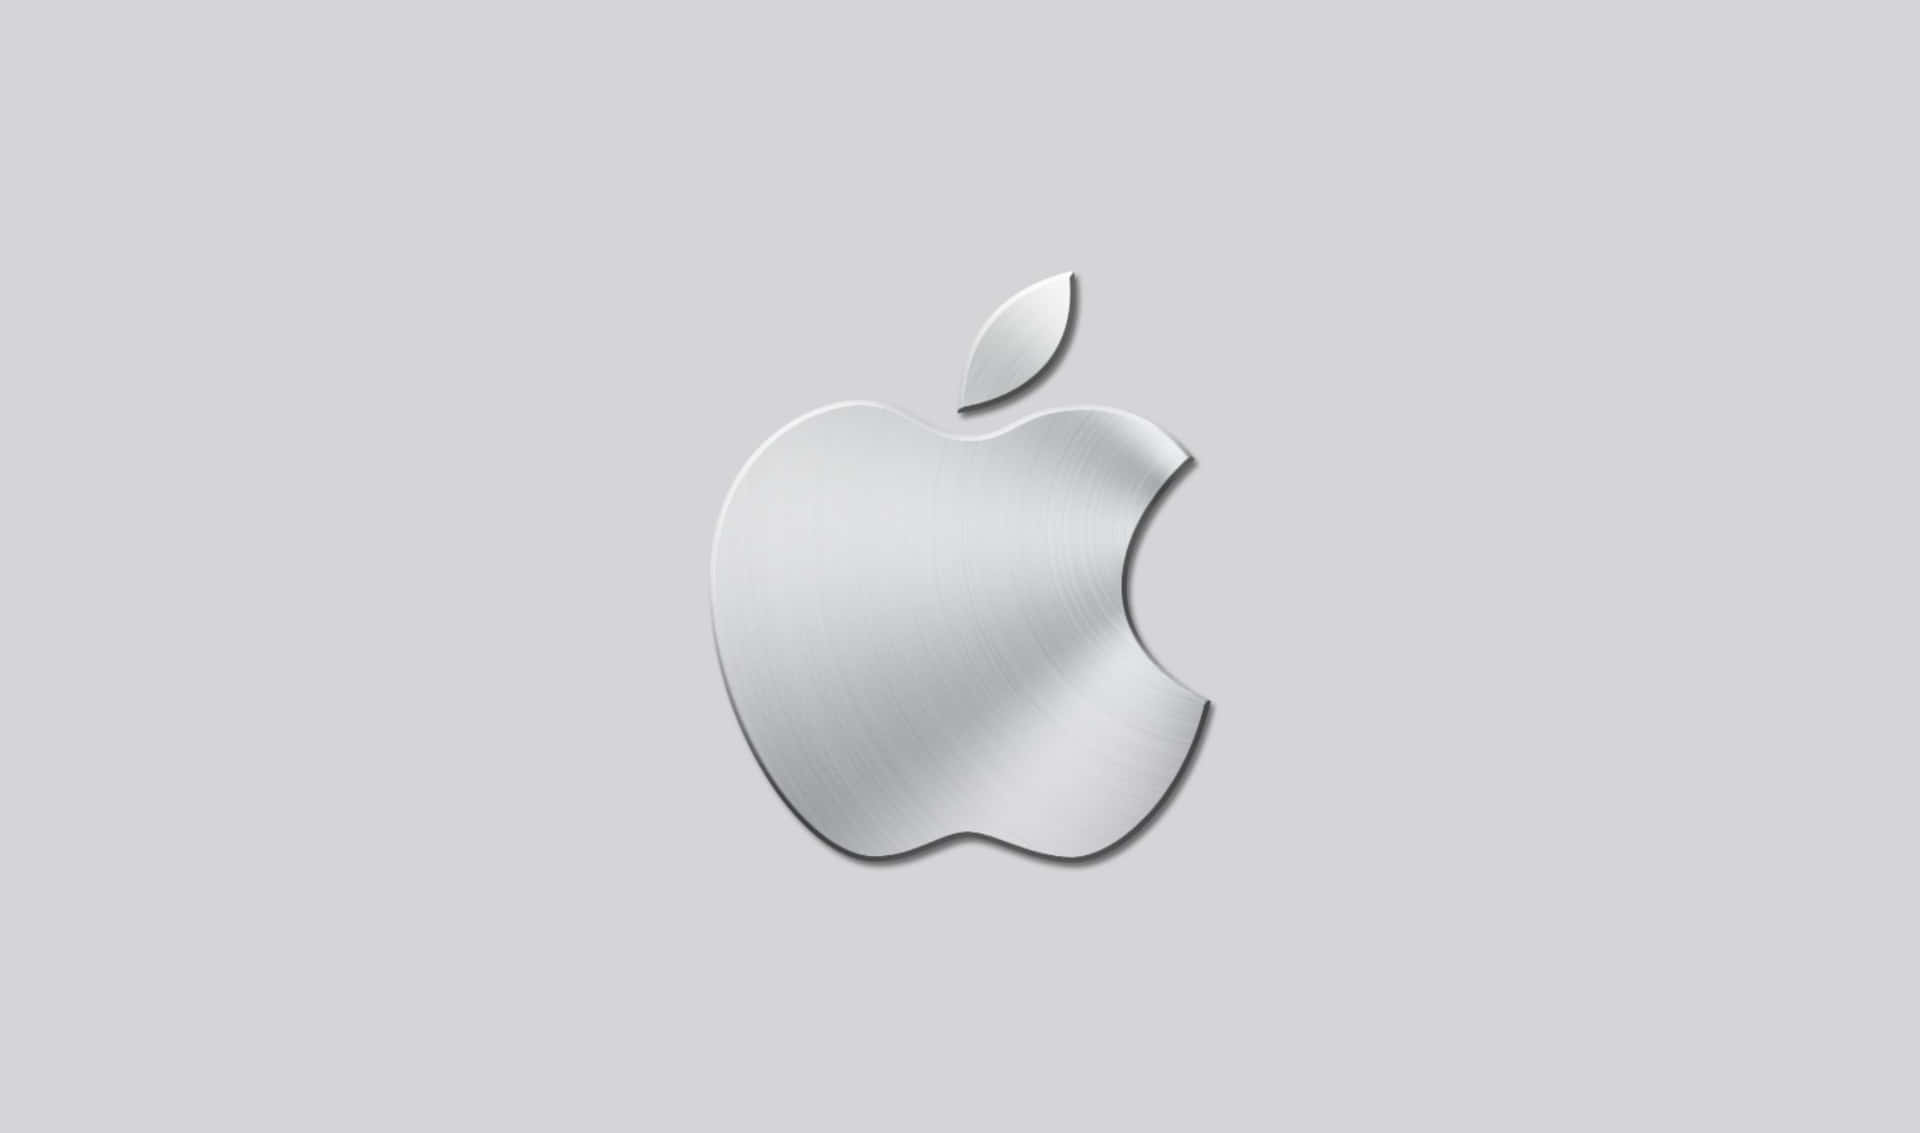 2440x1440 Silver Grey Apple Logo Background